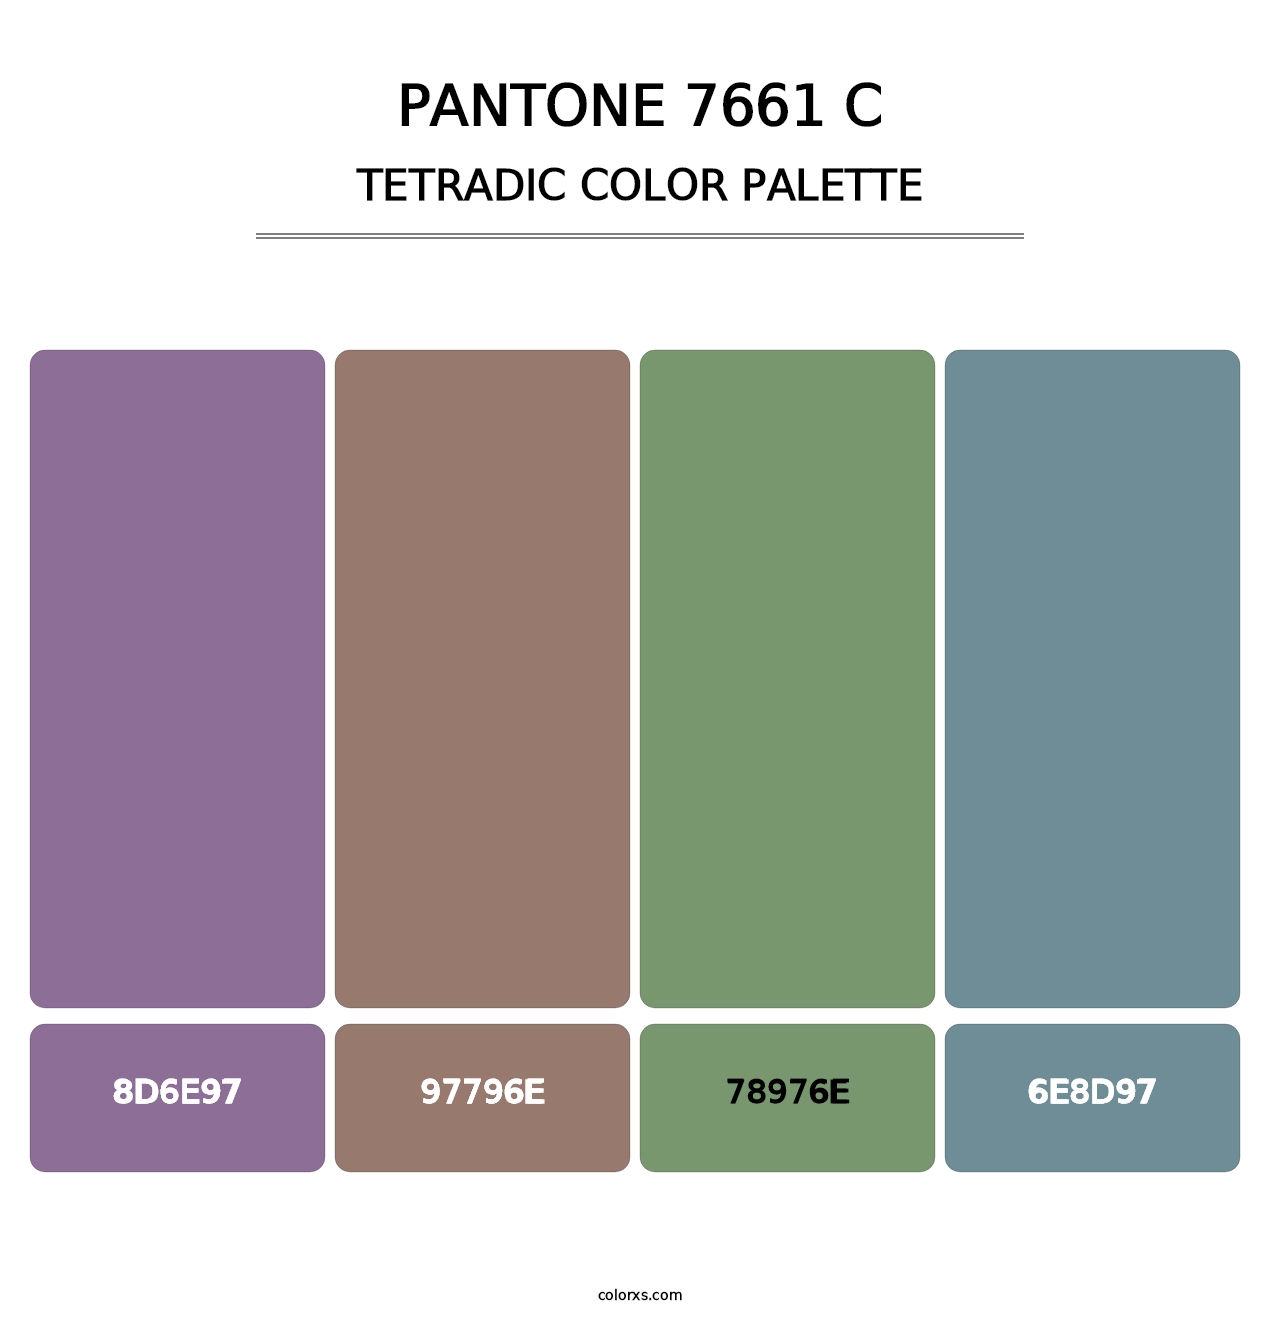 PANTONE 7661 C - Tetradic Color Palette